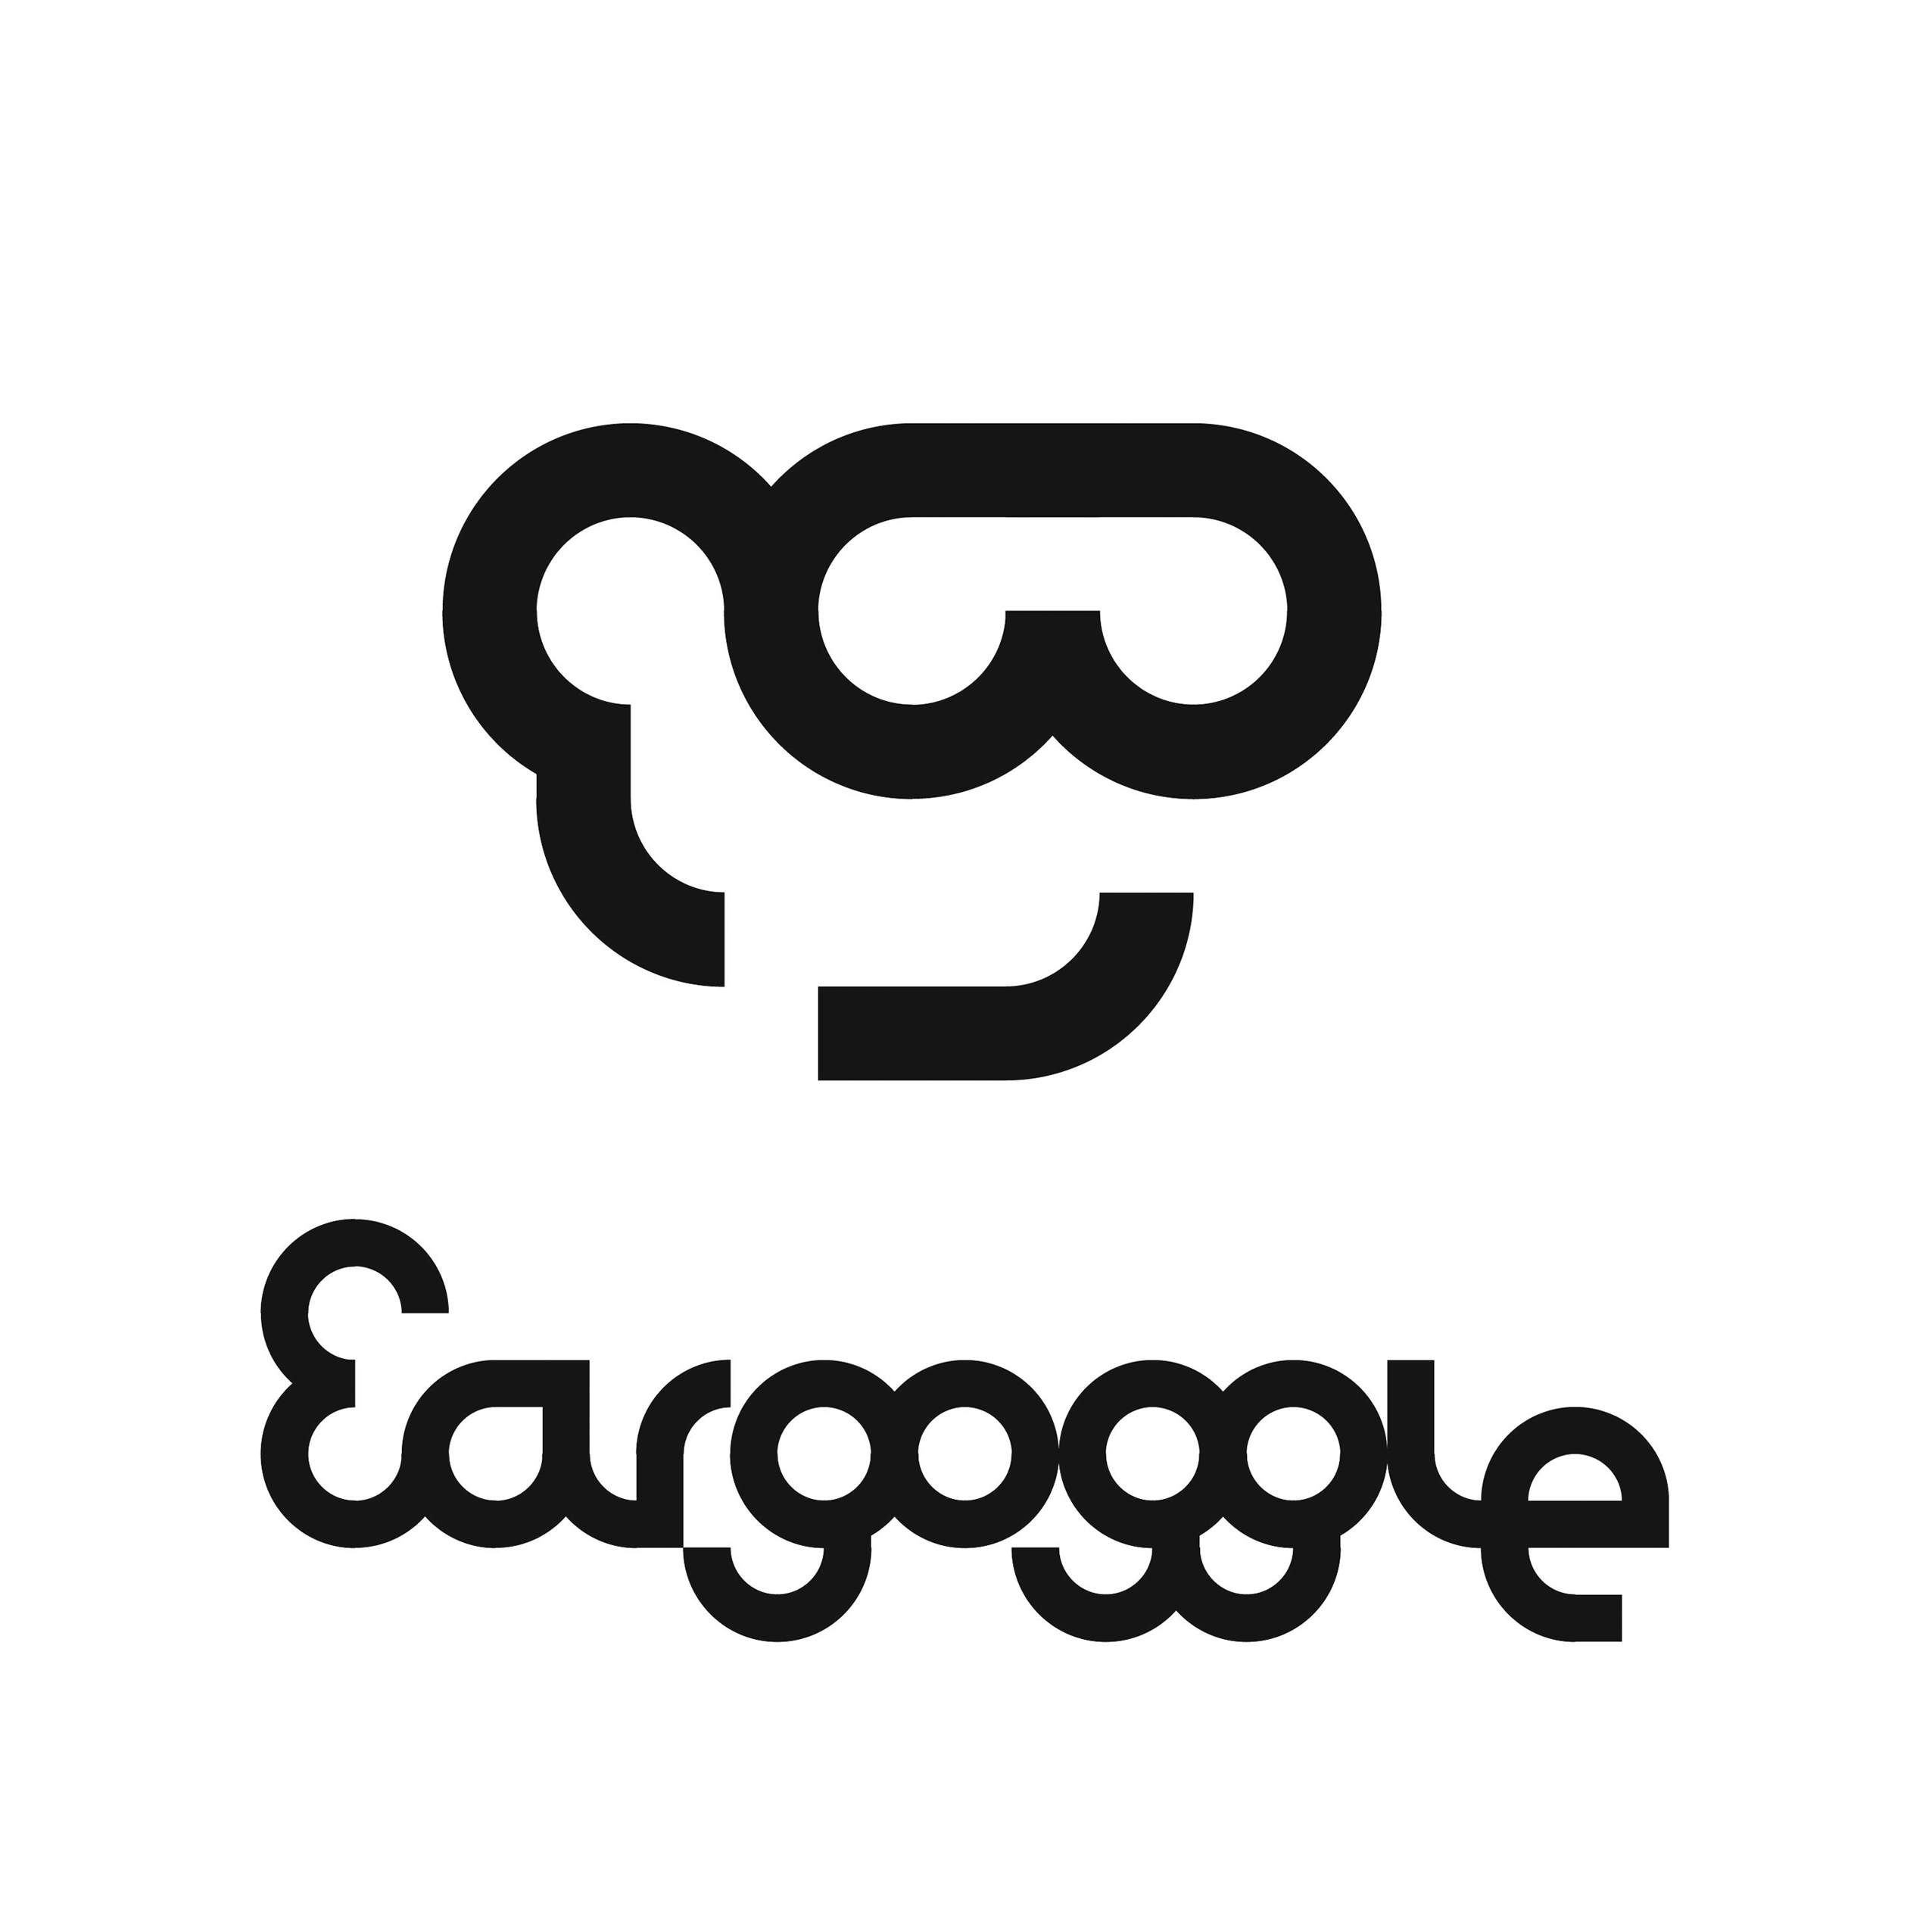 Eargoggle 